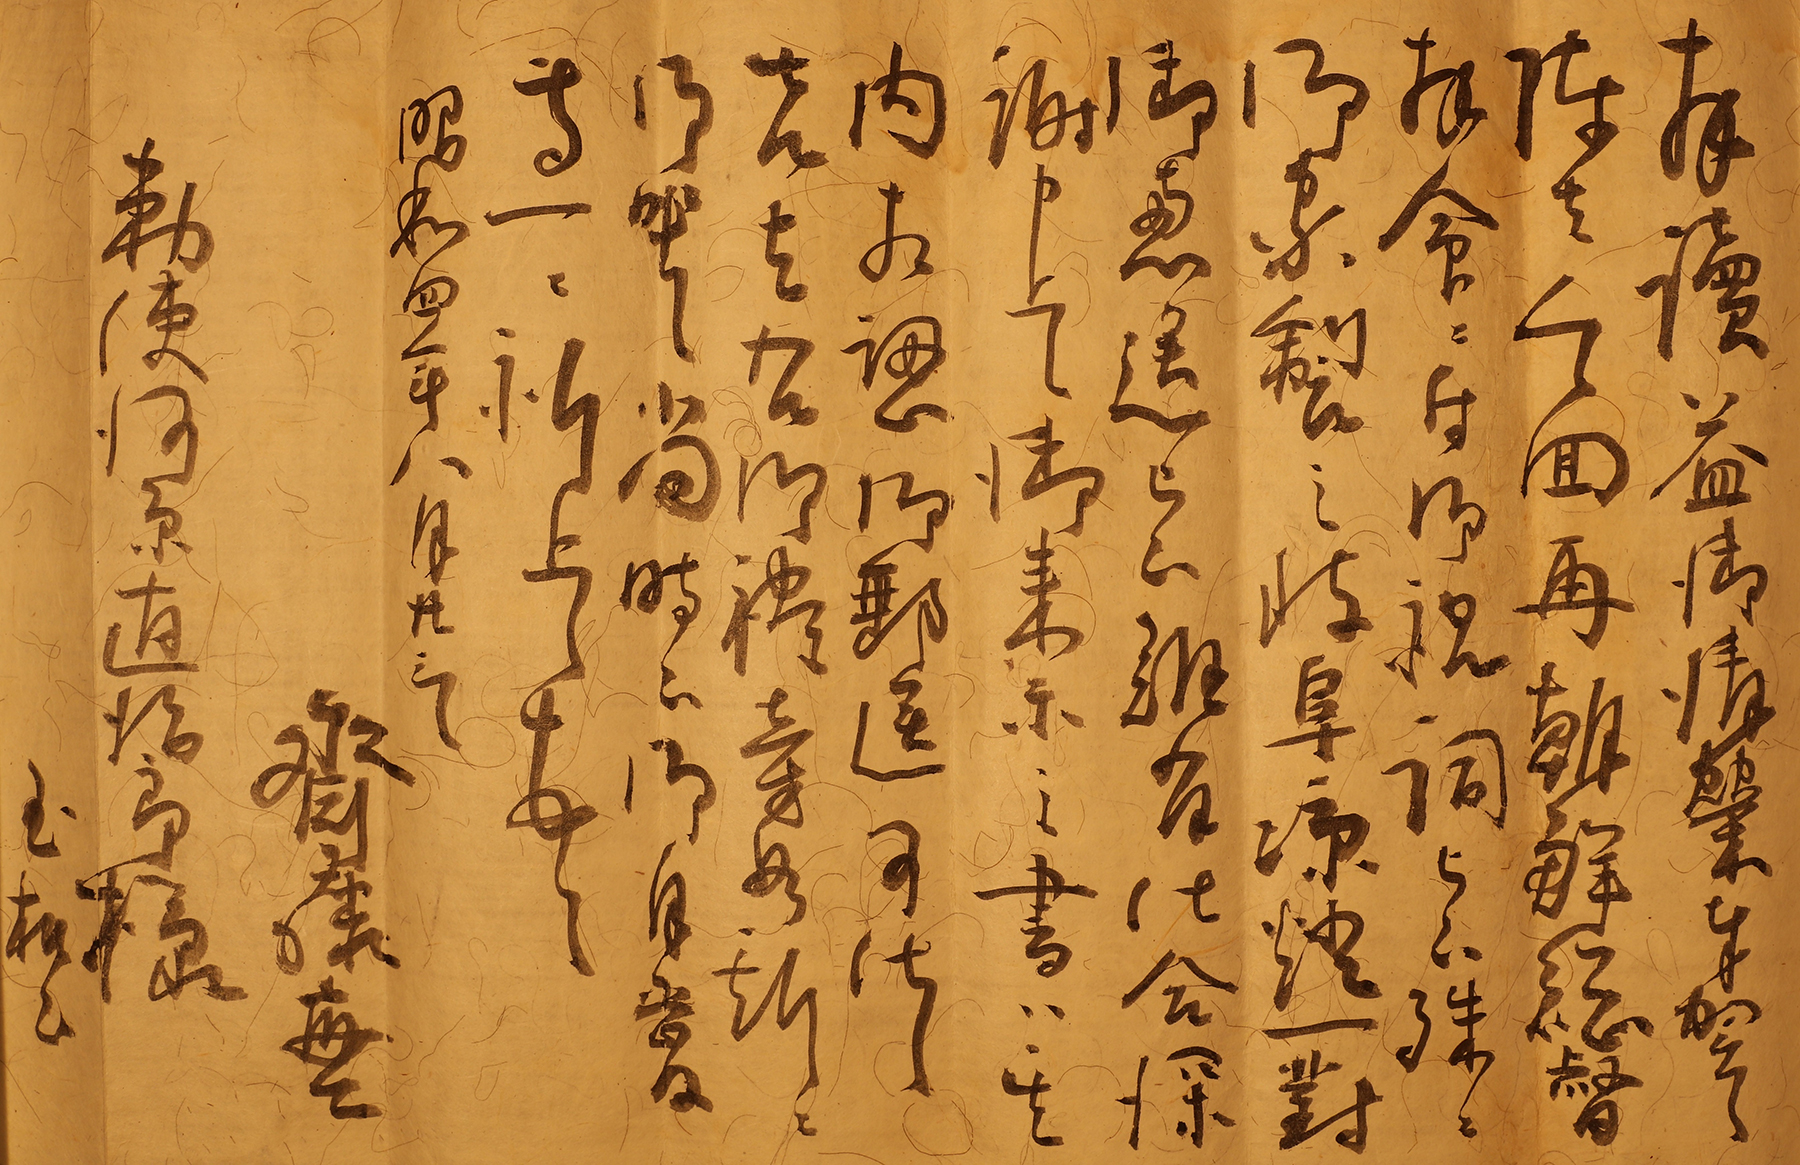 Makoto Saito’s Letter(To Naojiro Teshigawara) (Partial)